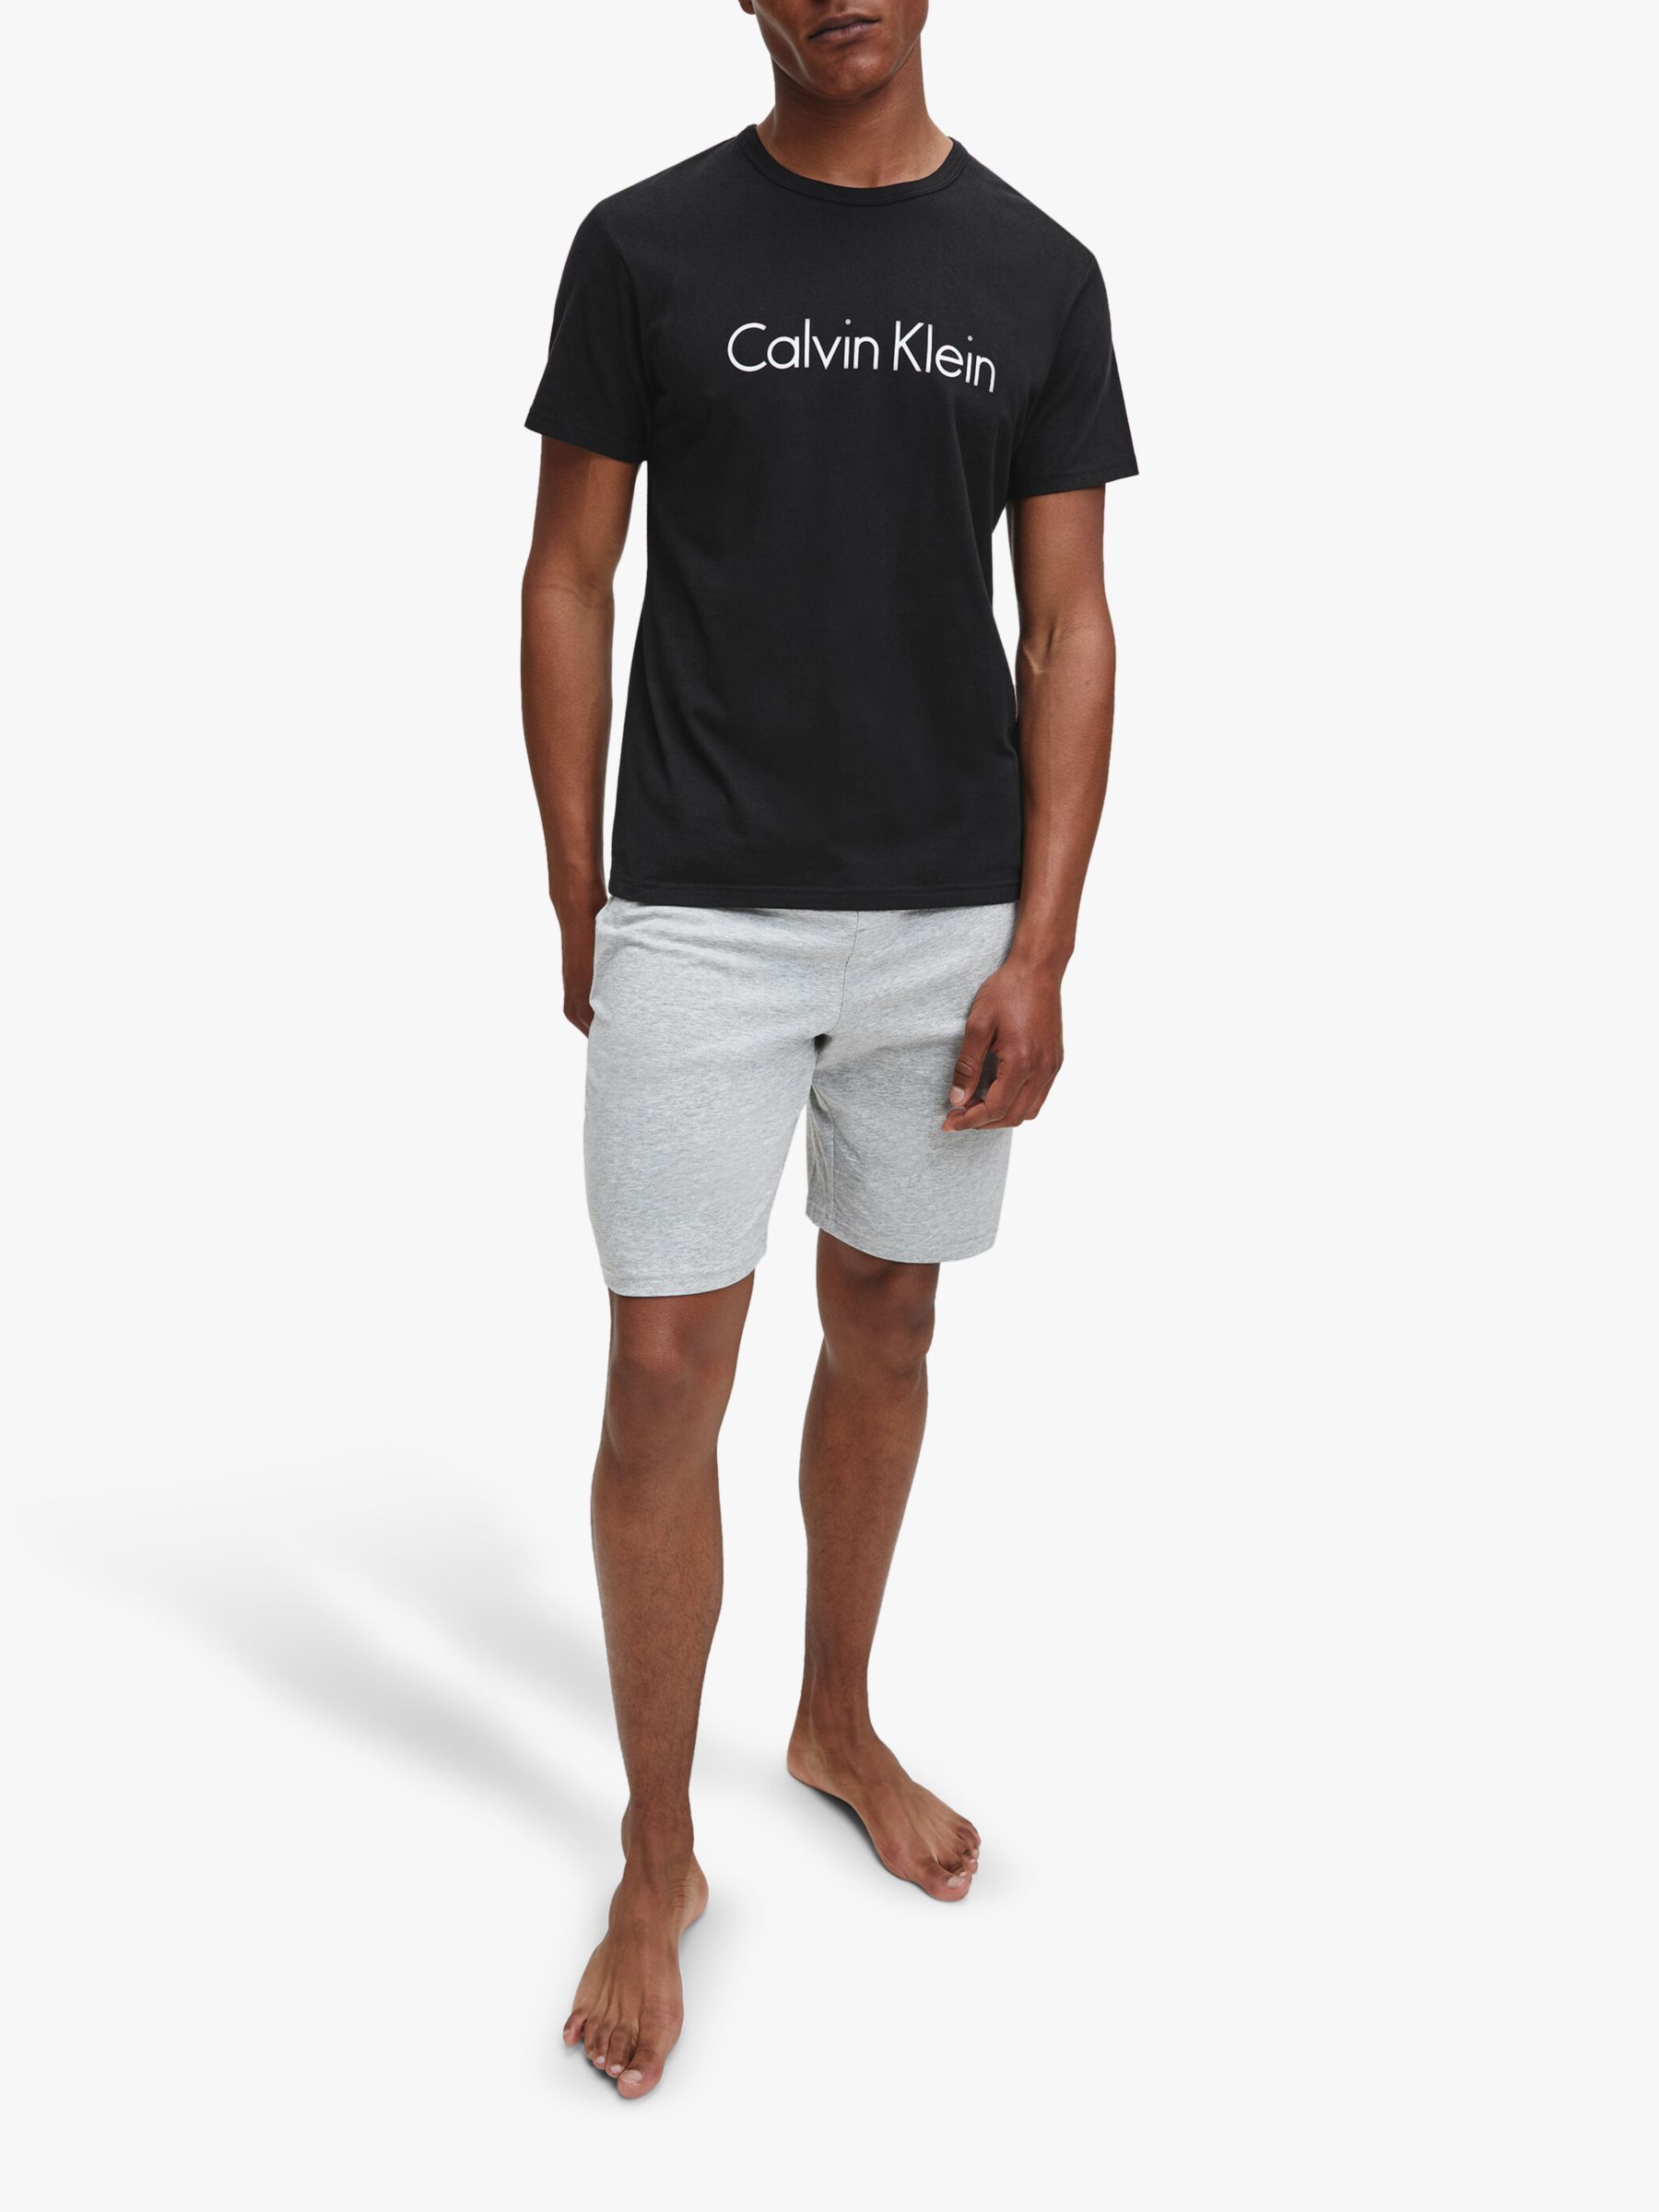 Mens Calvin Klein Pyjamas Nightwear John Lewis Partners